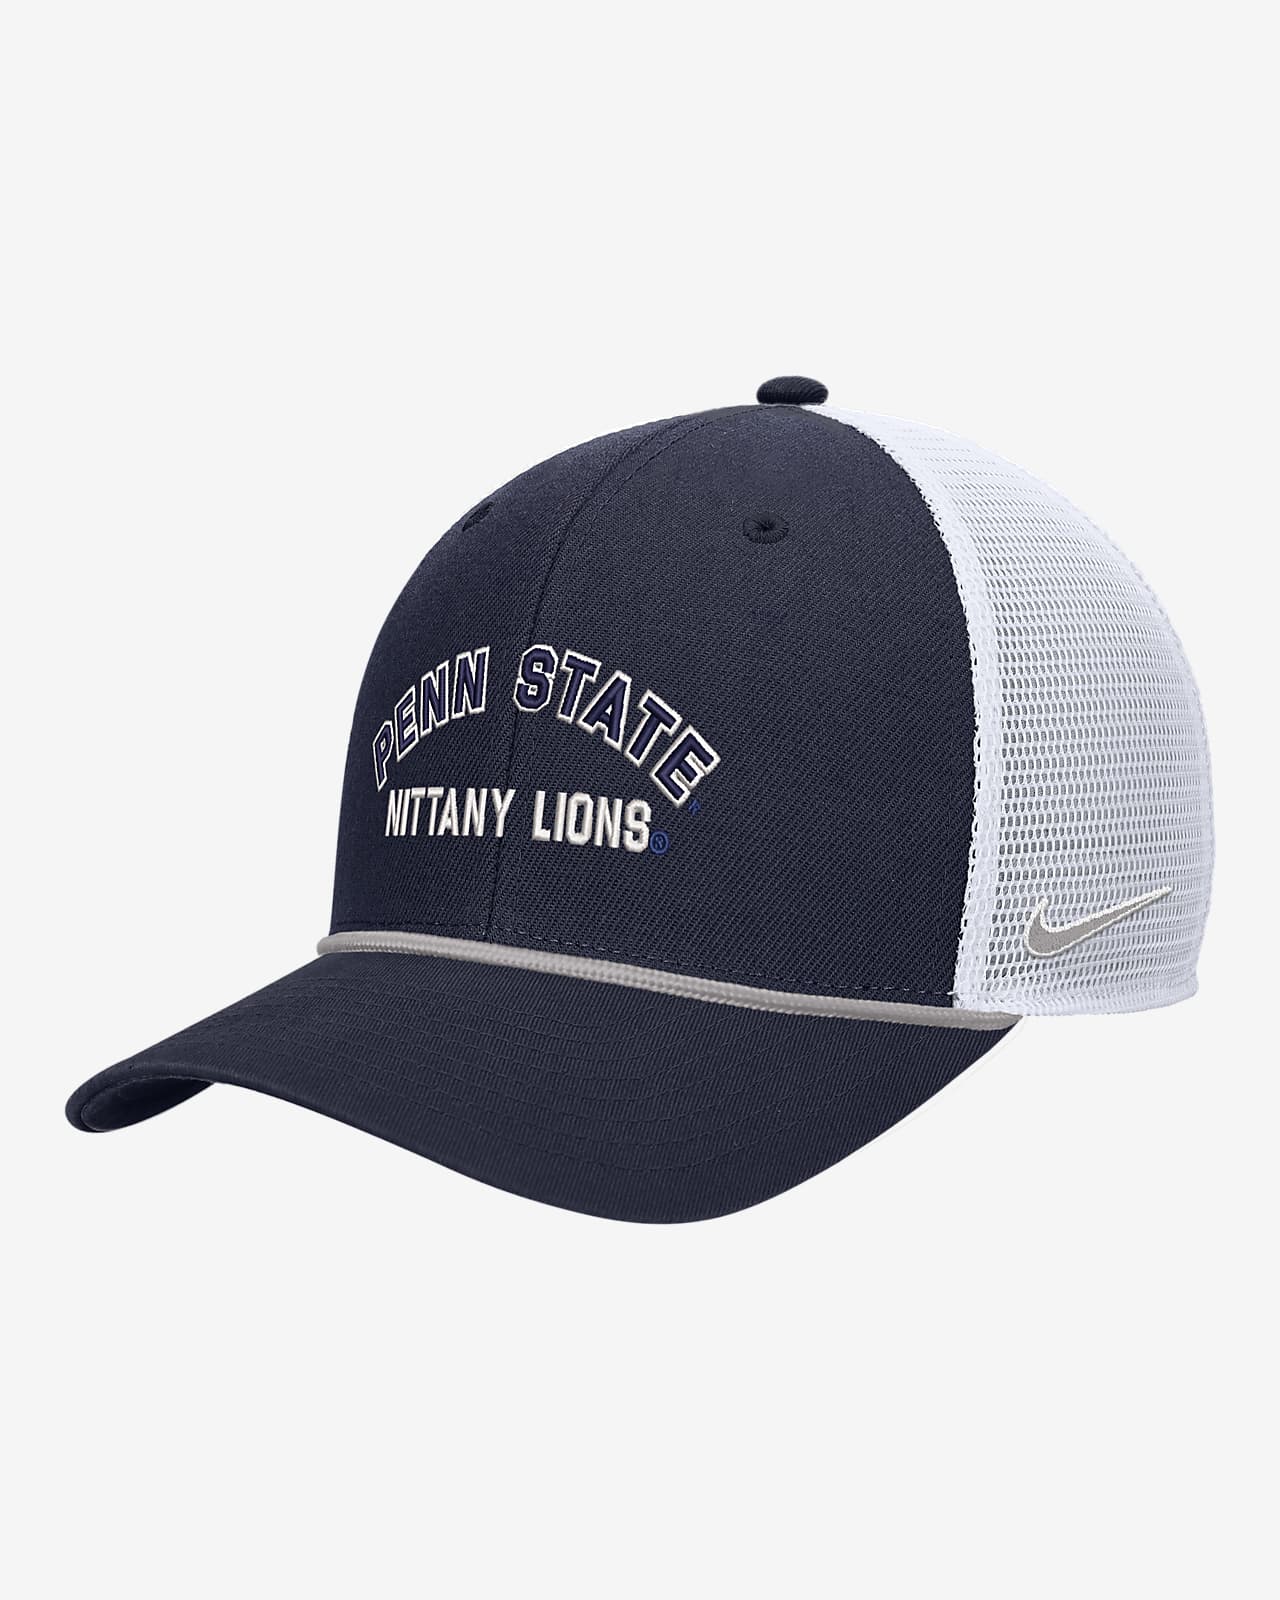 Penn State Nike College Snapback Trucker Hat